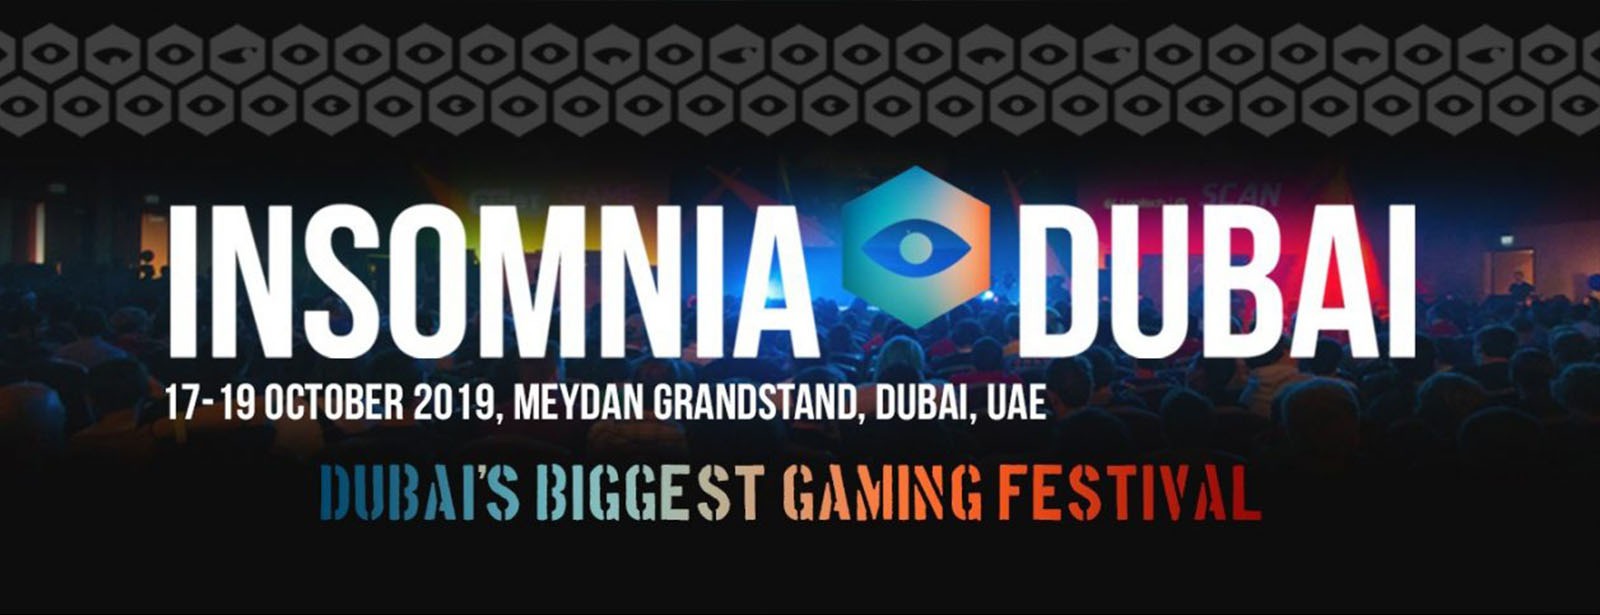 Insomnia Gaming Festival 2019 - Coming Soon in UAE